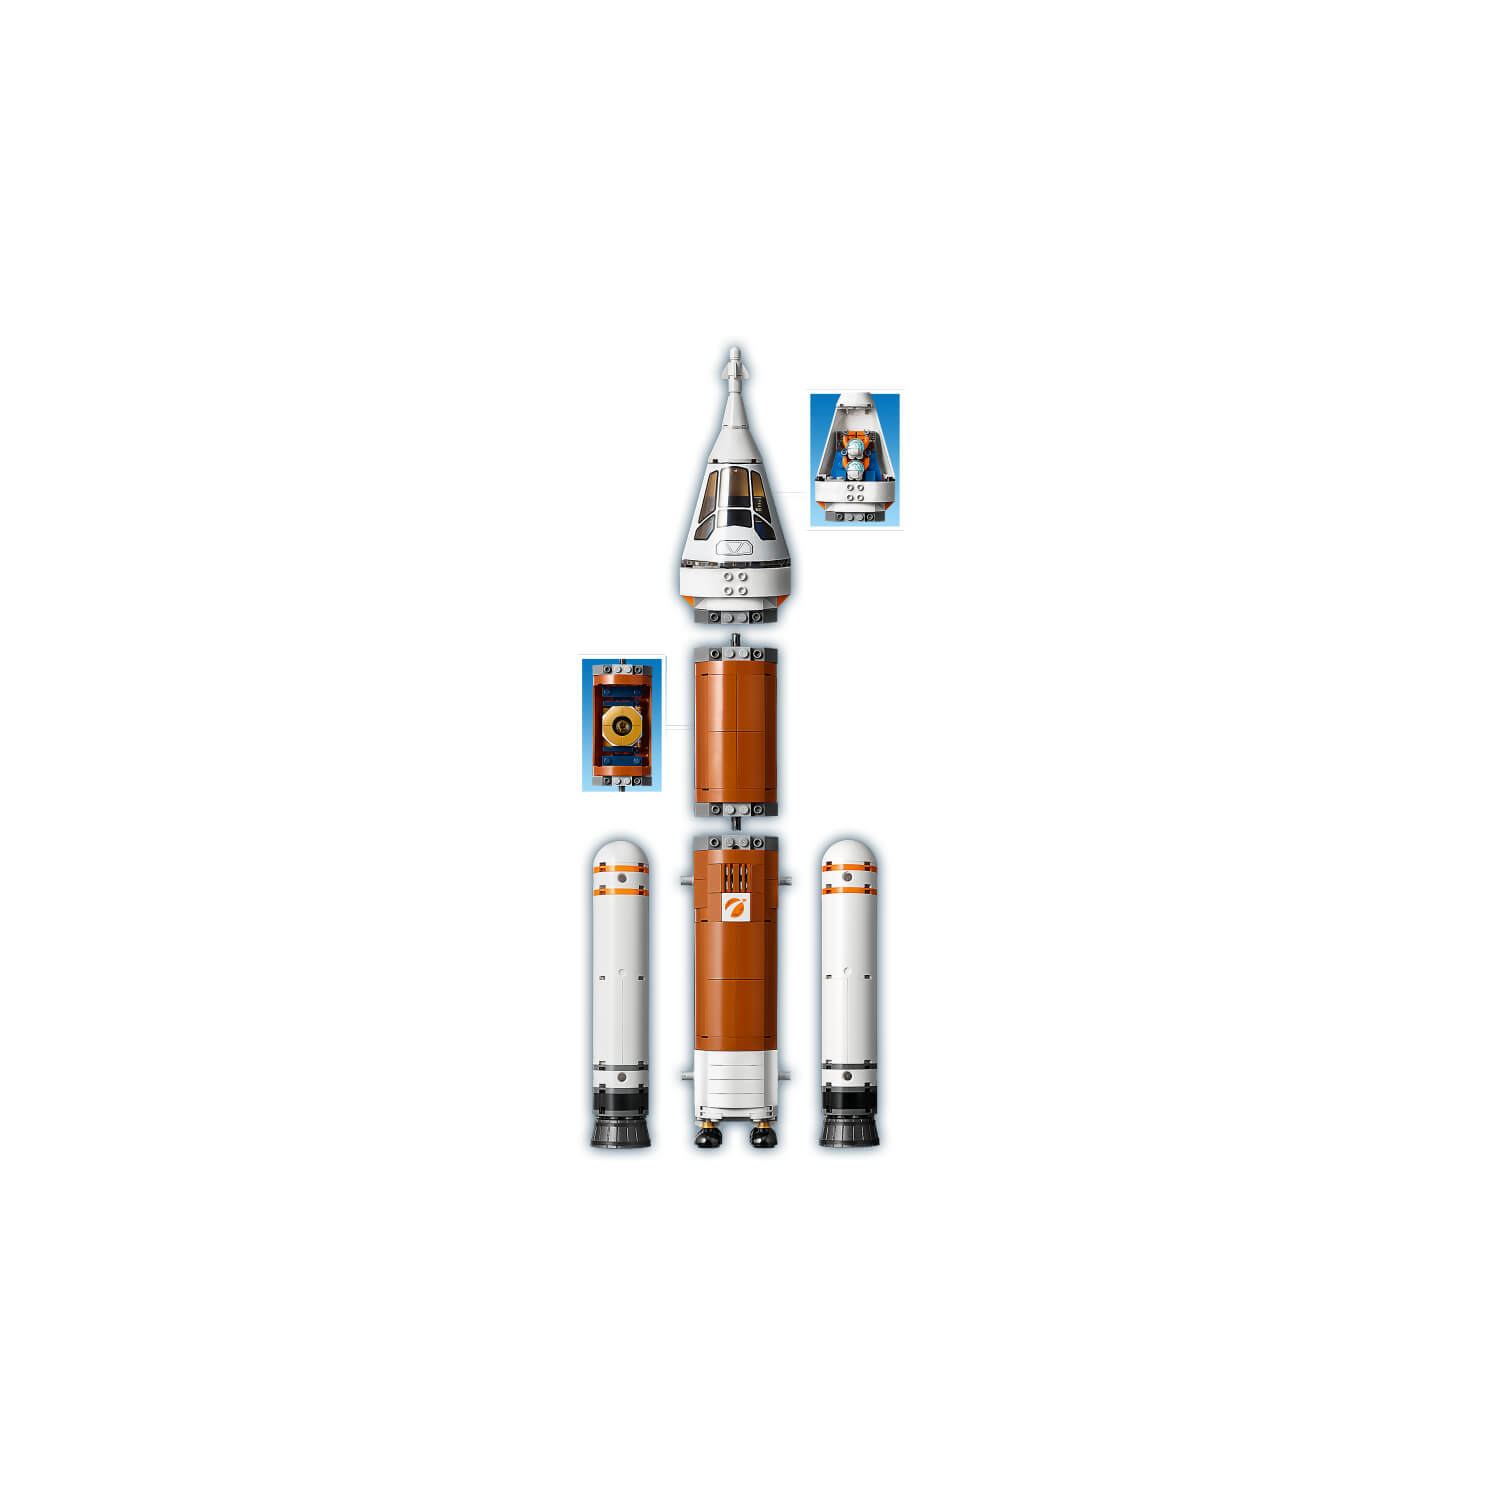 60228 Raketa za duboki svemir i kontrola lansiranja